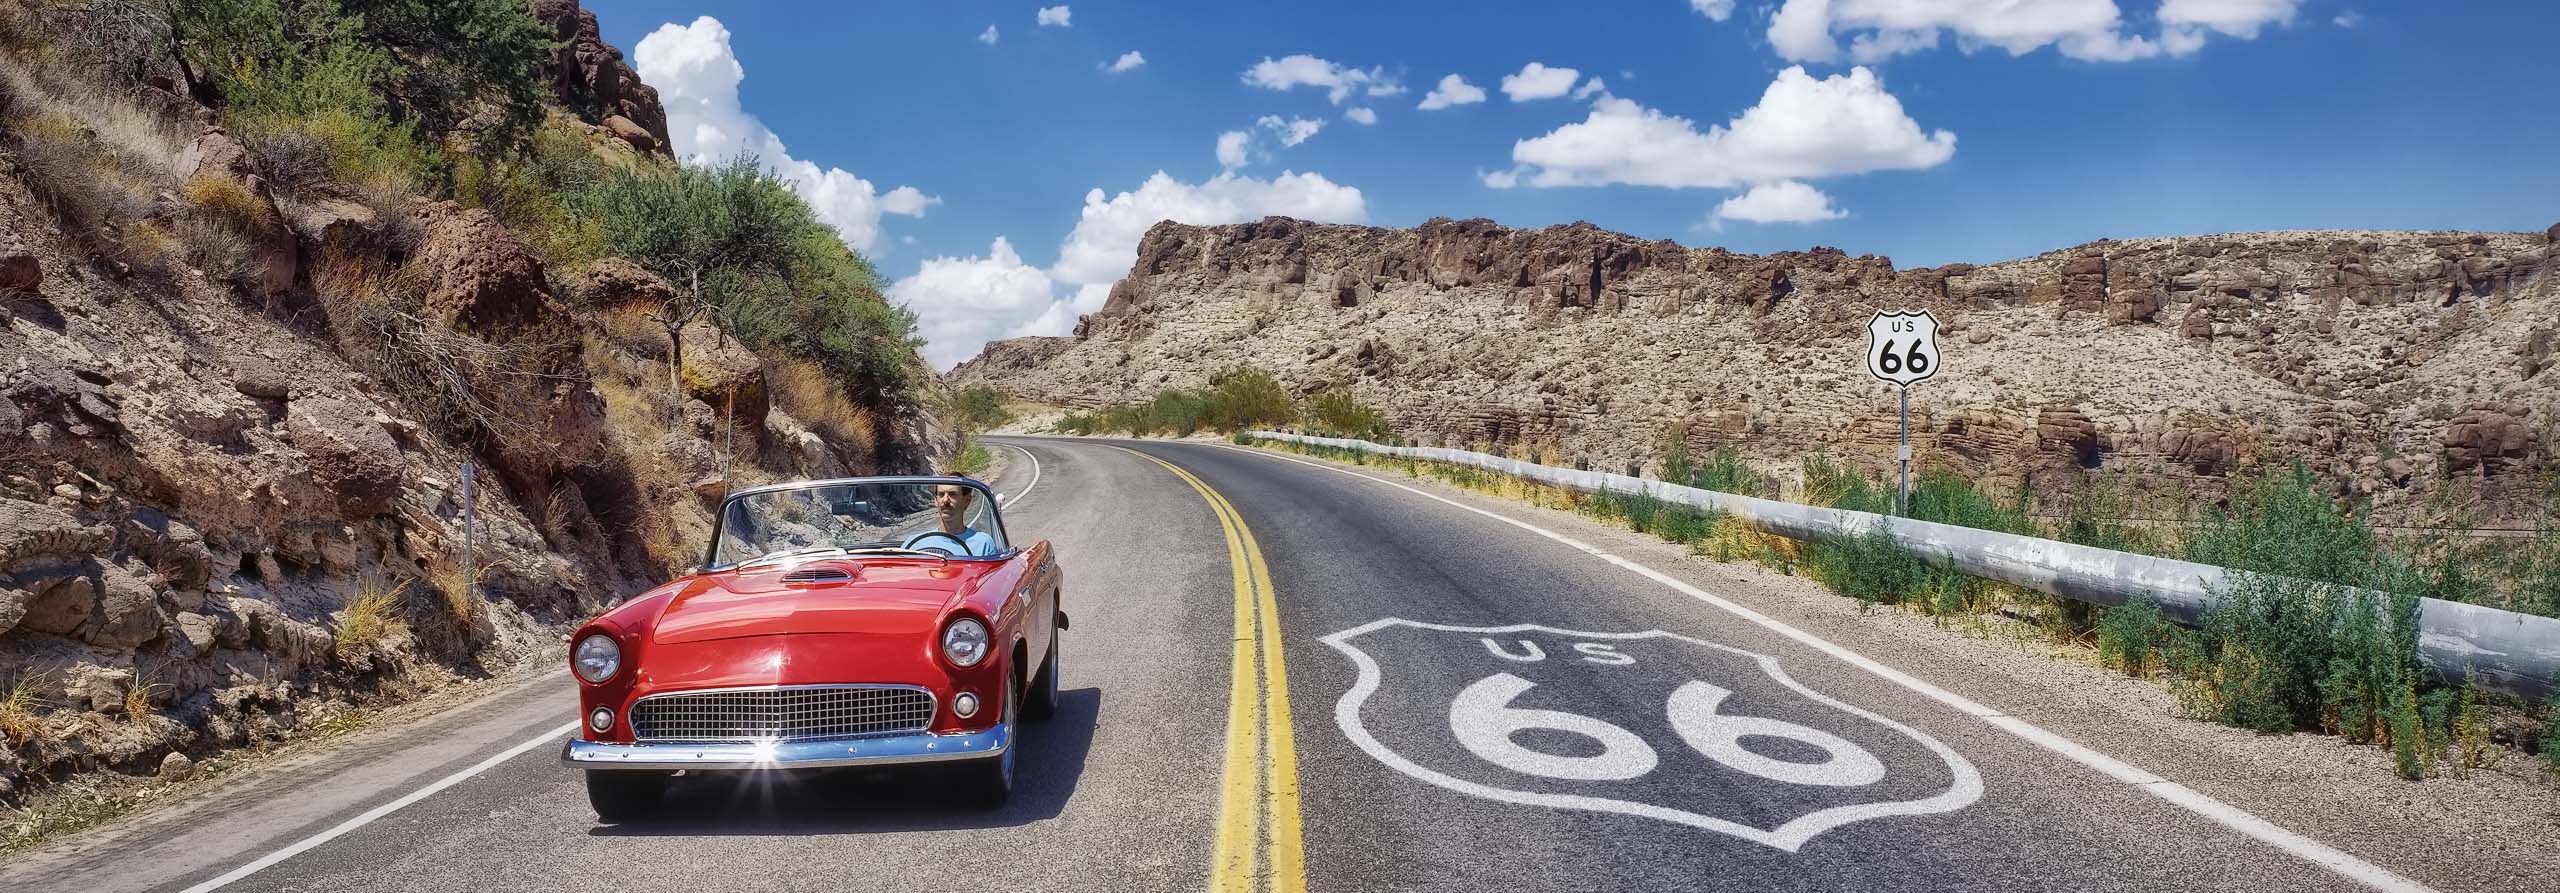   Ford Thunderbird, Route 66 near Kingman, Arizona, USA 